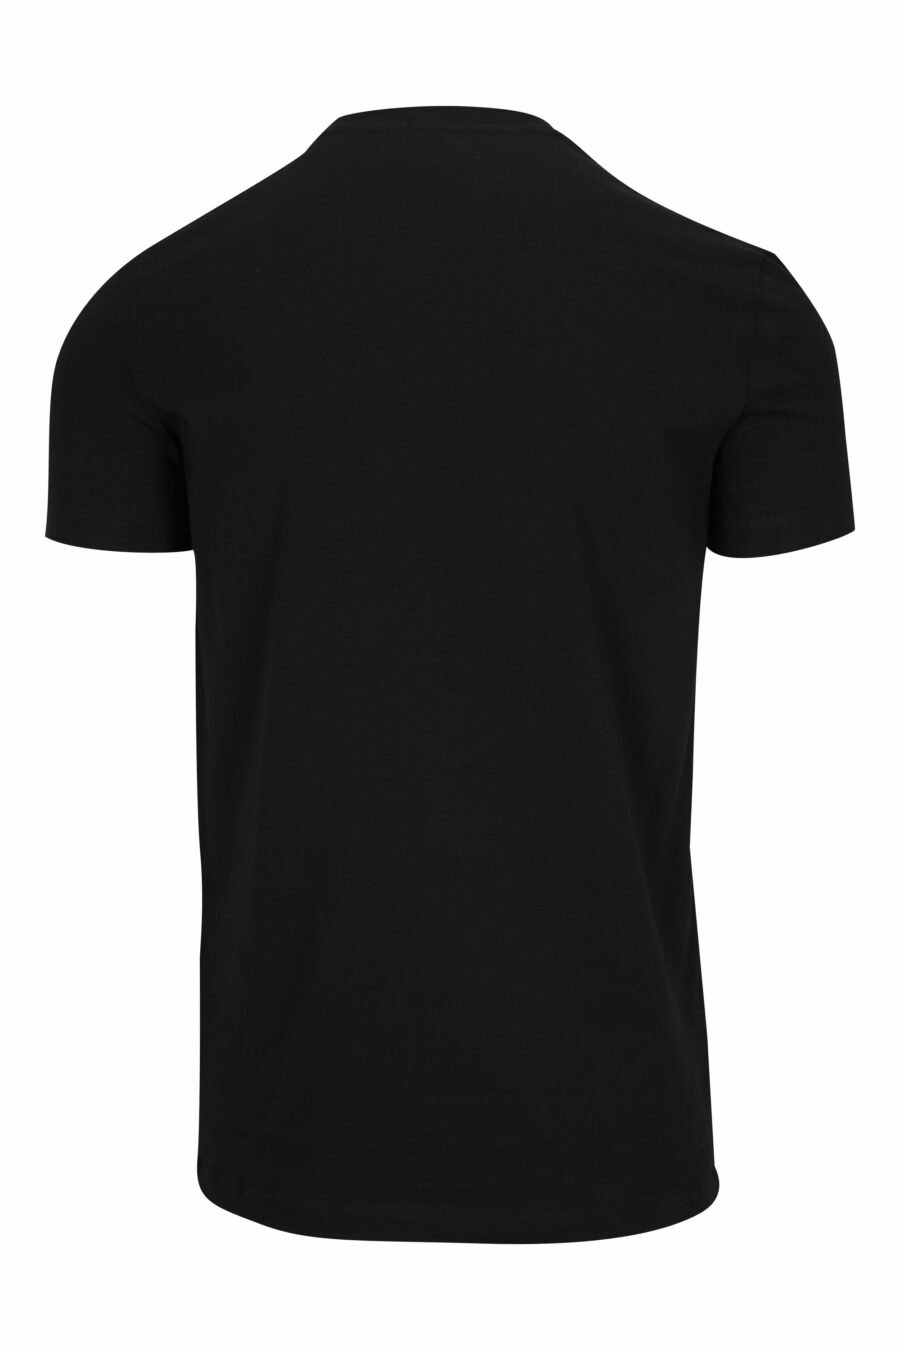 Black T-shirt with white underwear minilogue - 8032674811509 1